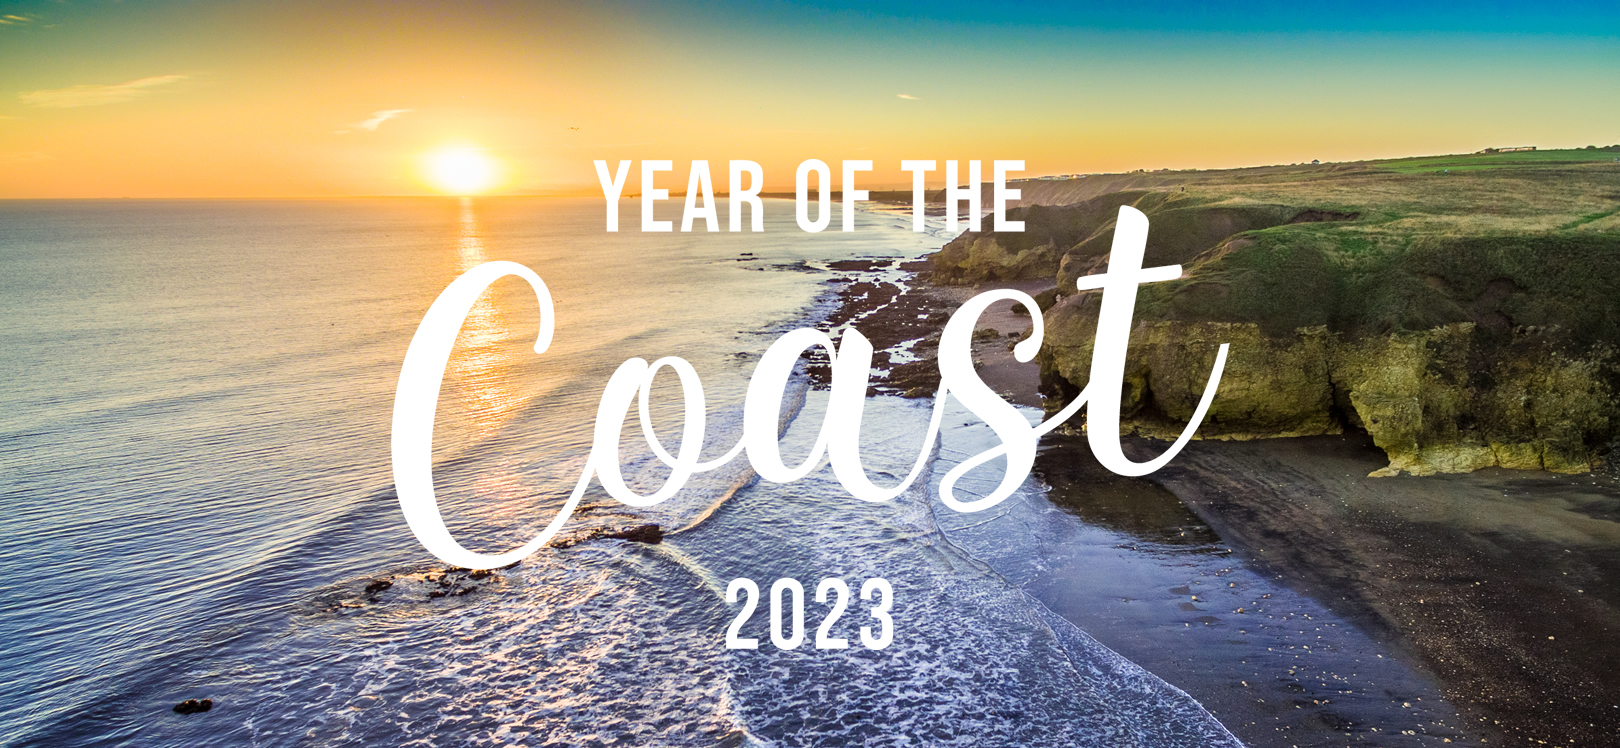 Year of the coast logo overlooking Durham Coast